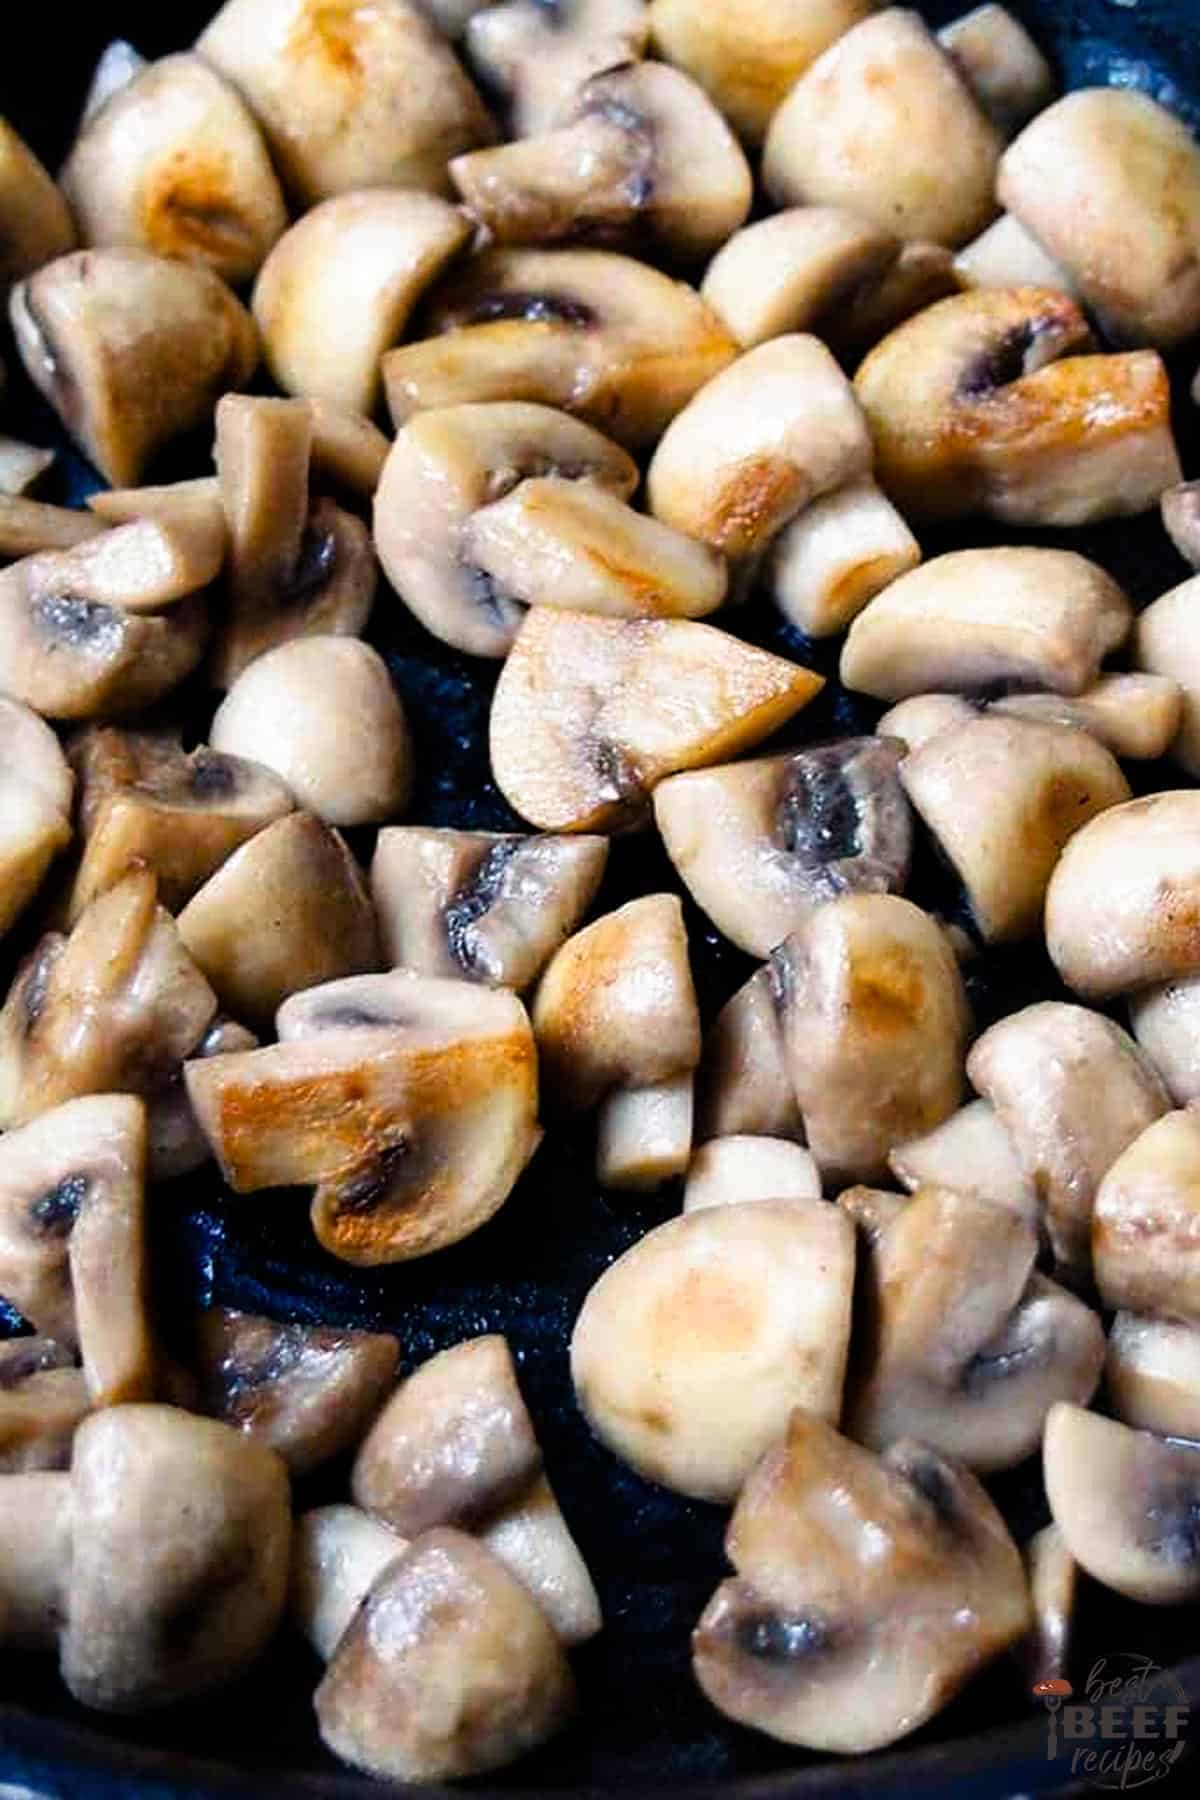 Mushrooms cooking in a pan